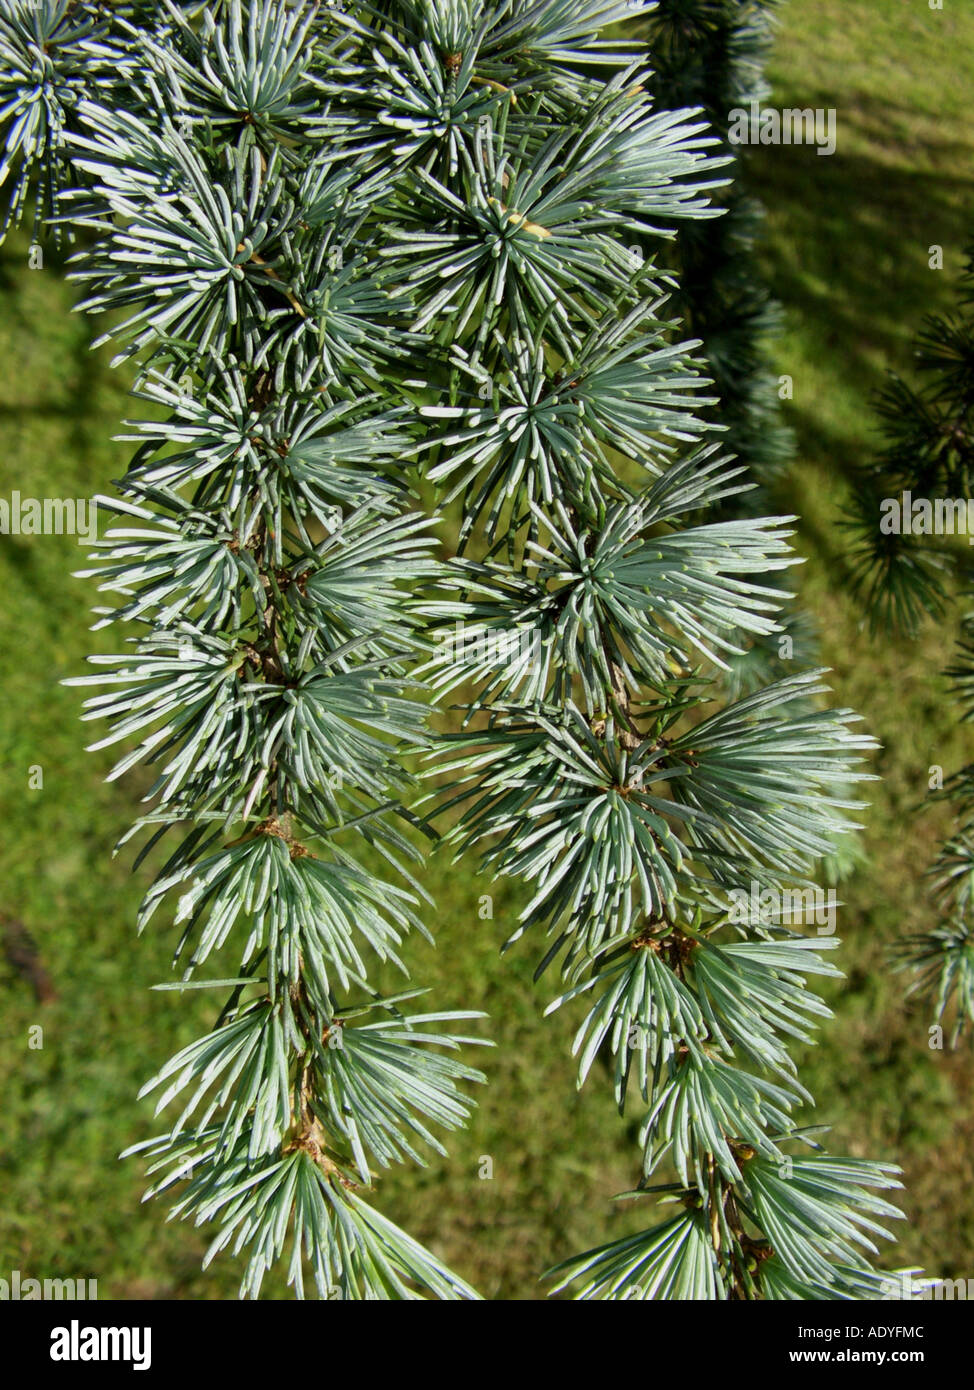 Blue cedar (Cedrus atlantica 'Glauca', Cedrus atlantica Glauca), branch with short shoot Stock Photo